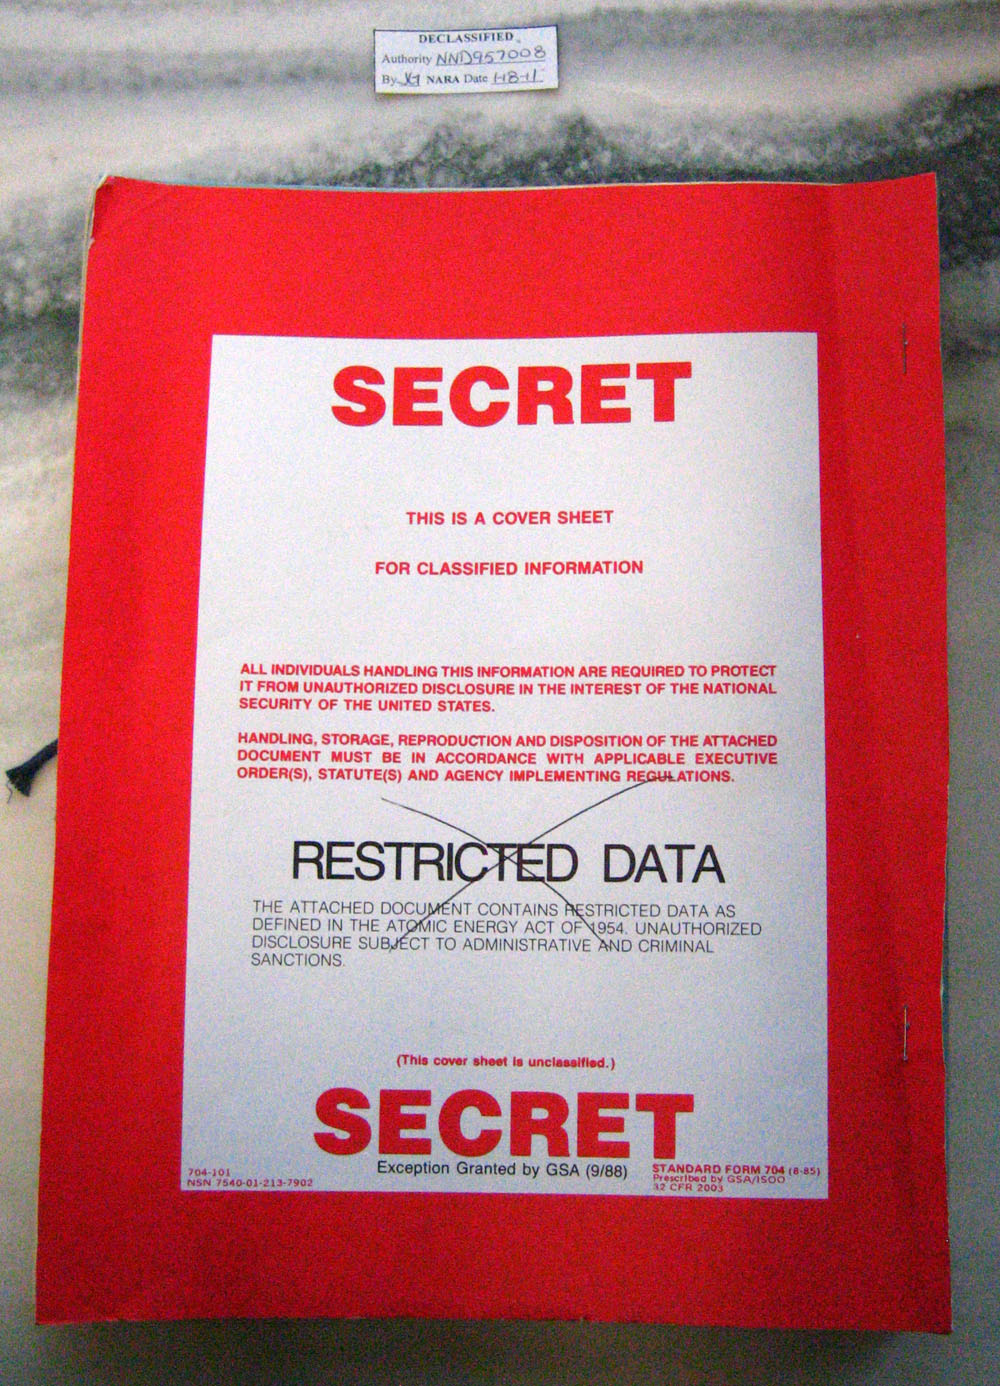 Secret data. Обложка Top Secret. Cover Sheet - крышка. "Took classified information".